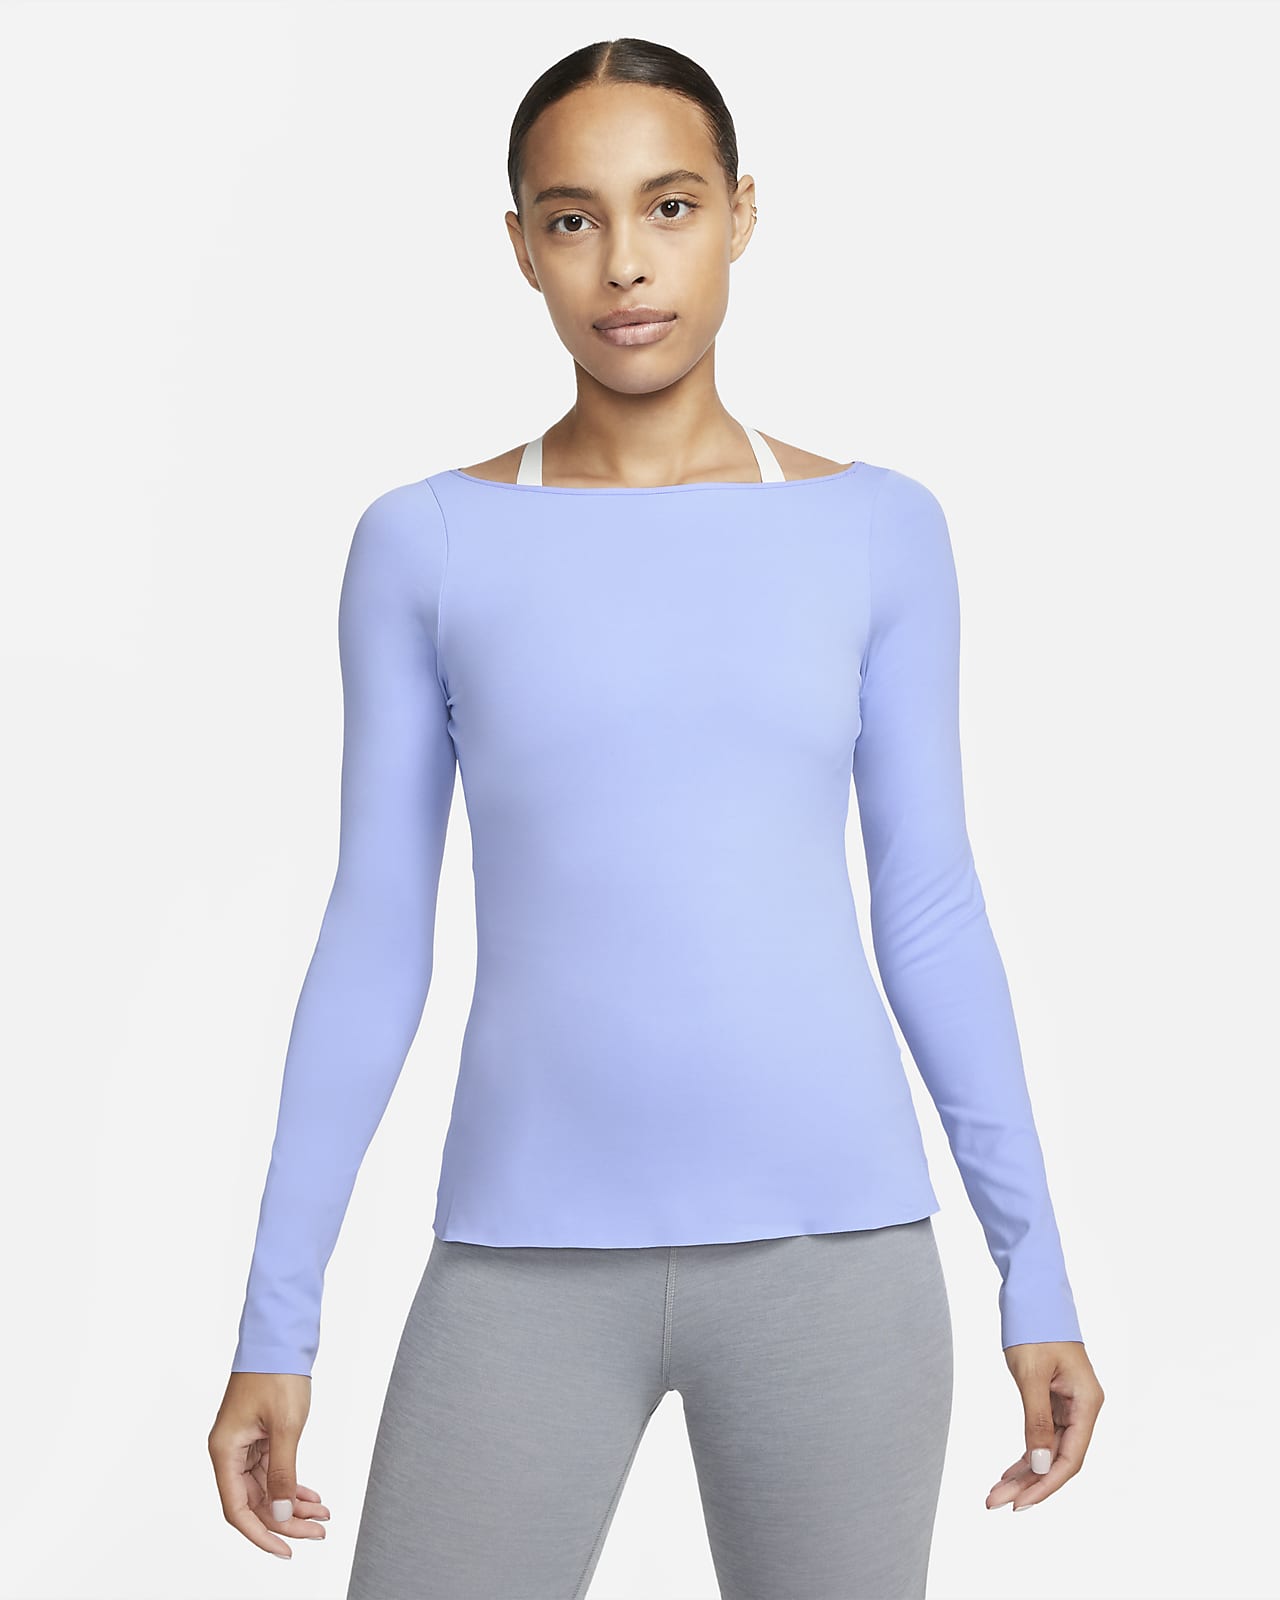 Nike Yoga Dri-FIT Luxe Women's Long-Sleeve Top